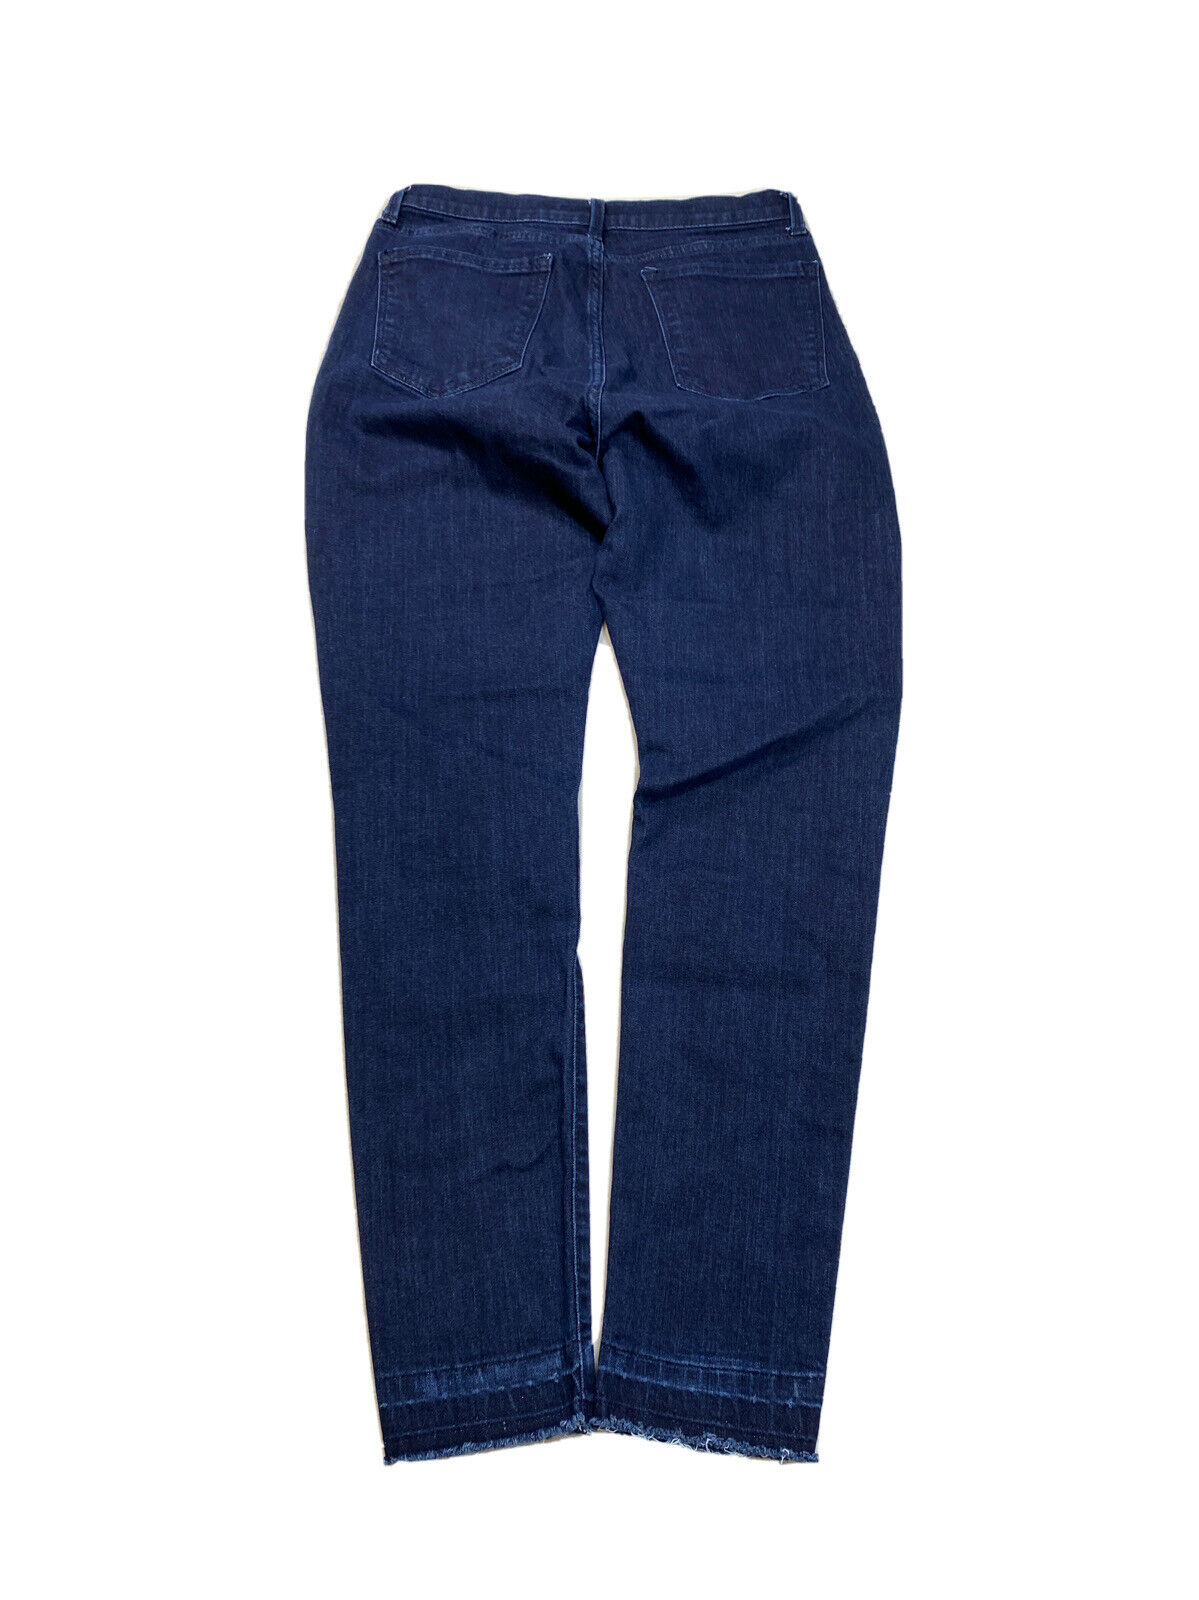 Banana Republic Women's Dark Wash High Rise Skinny Denim Jeans - 8